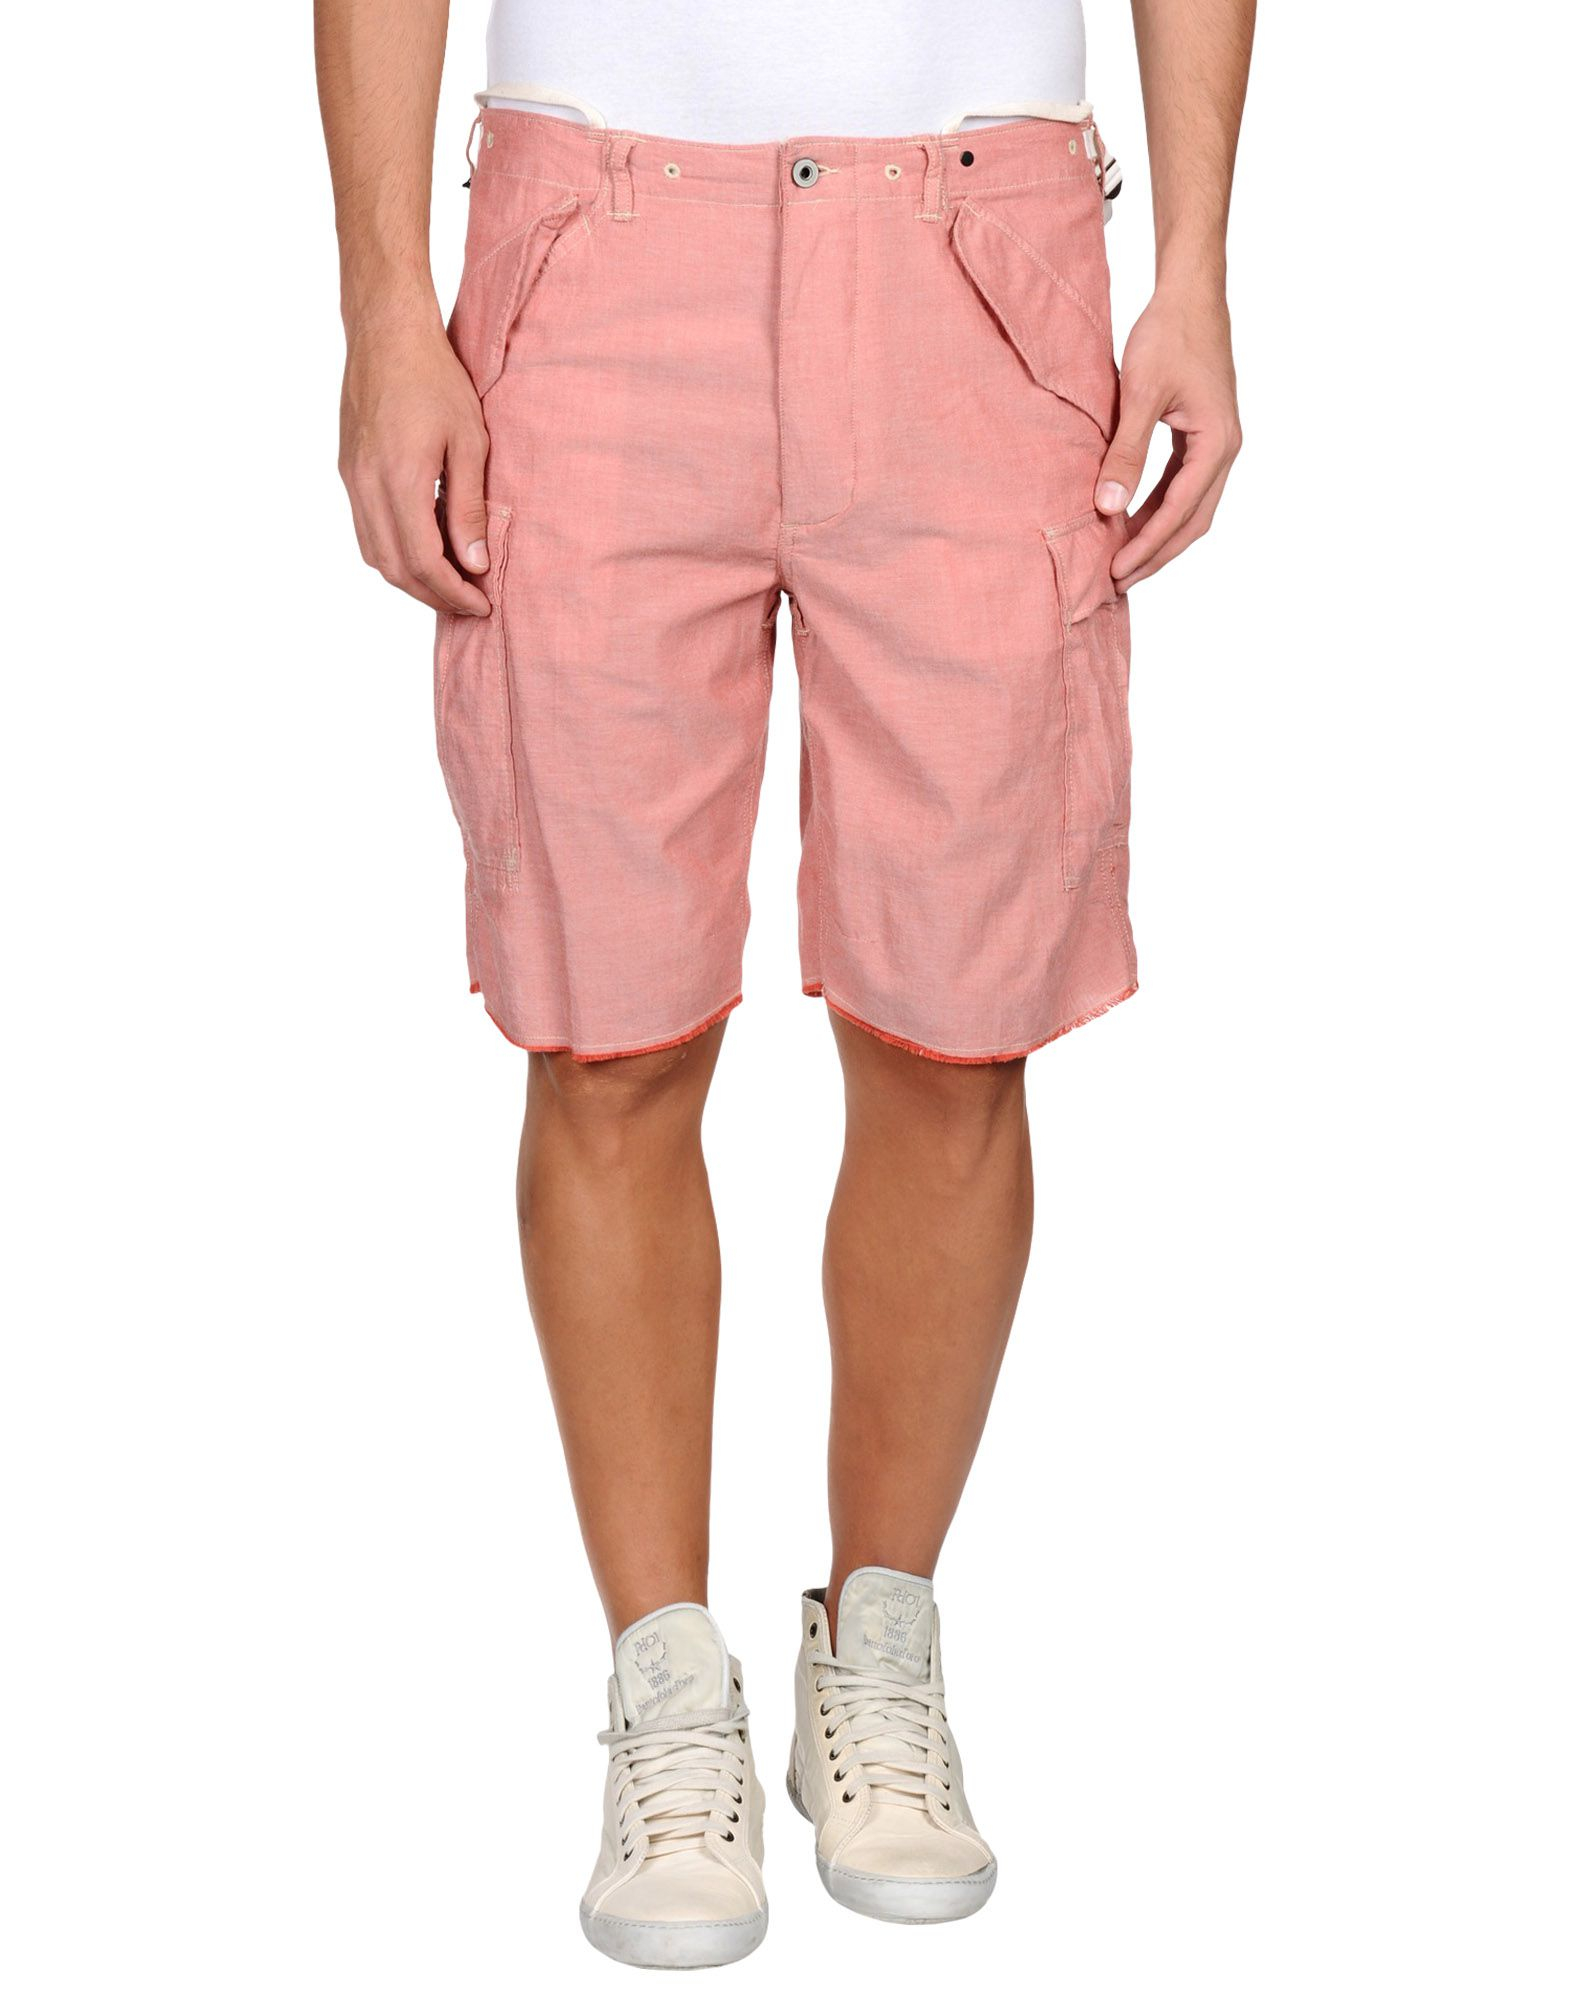 Lyst - Denim & Supply Ralph Lauren Bermuda Shorts in Pink for Men